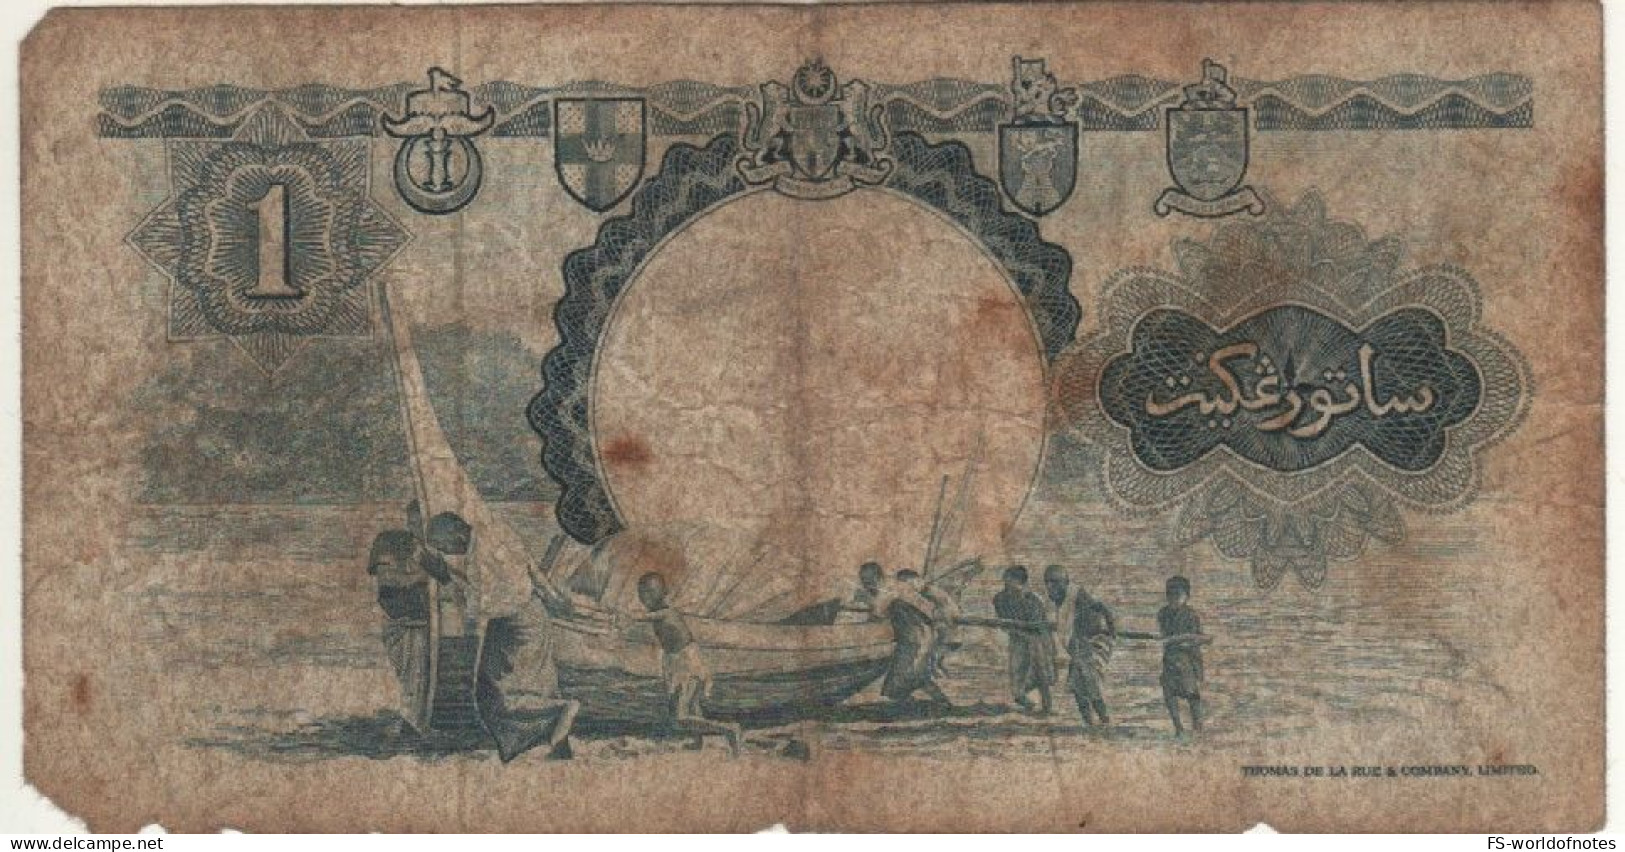 MALAYA & British BORNEO    1 Dollar     P8A  Dated  1st March 1959  ( Thomas De La Rue    Sailing Boat ) - Malaysie